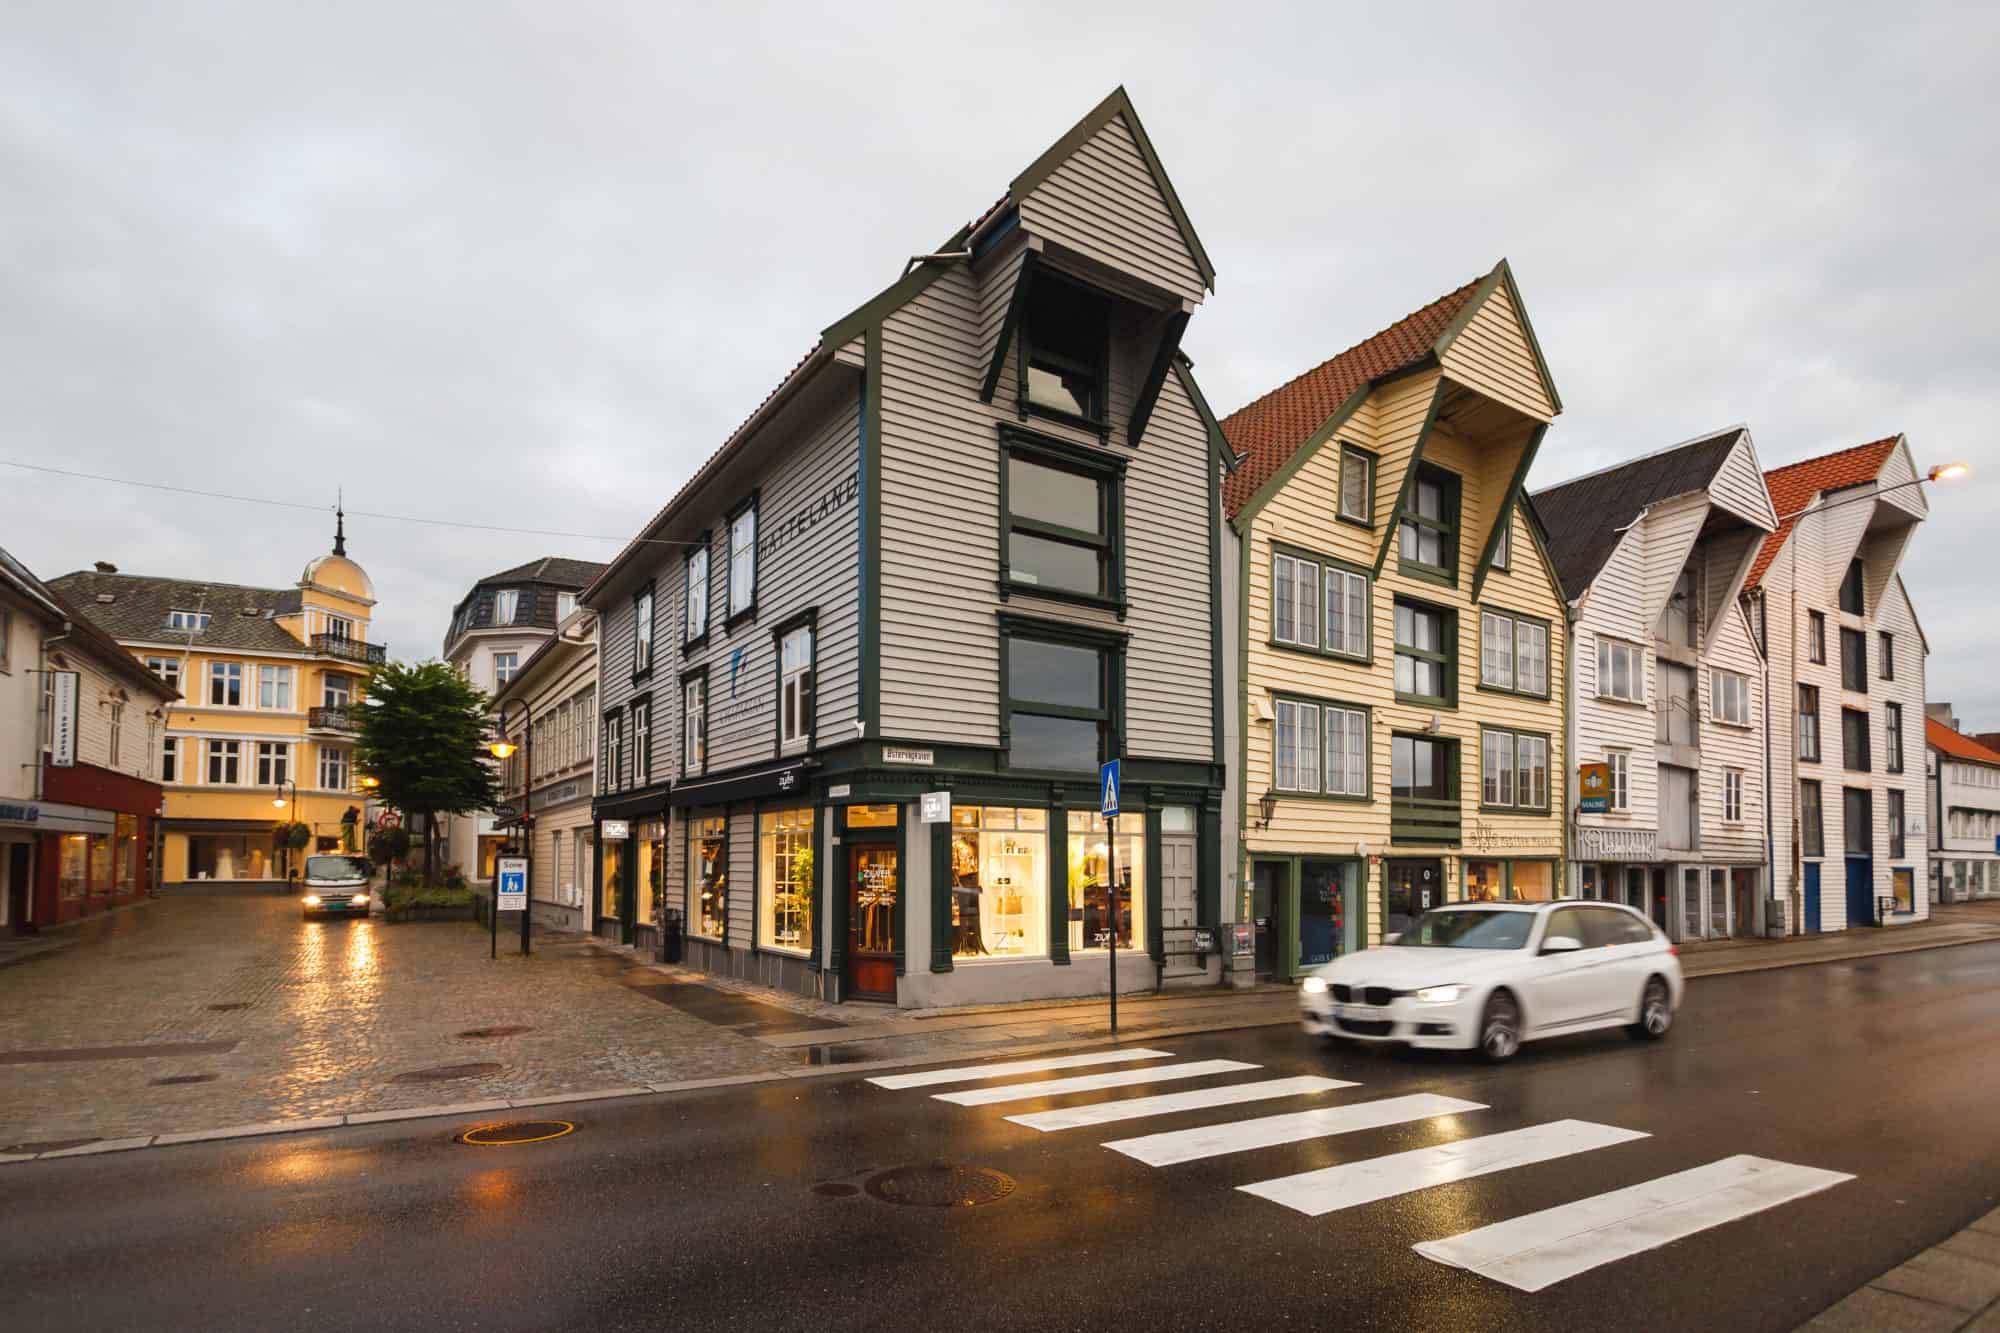 Stavanger, Norway - August 25 2017: The wooden facade of old buildings of Stavanger in rainy weather